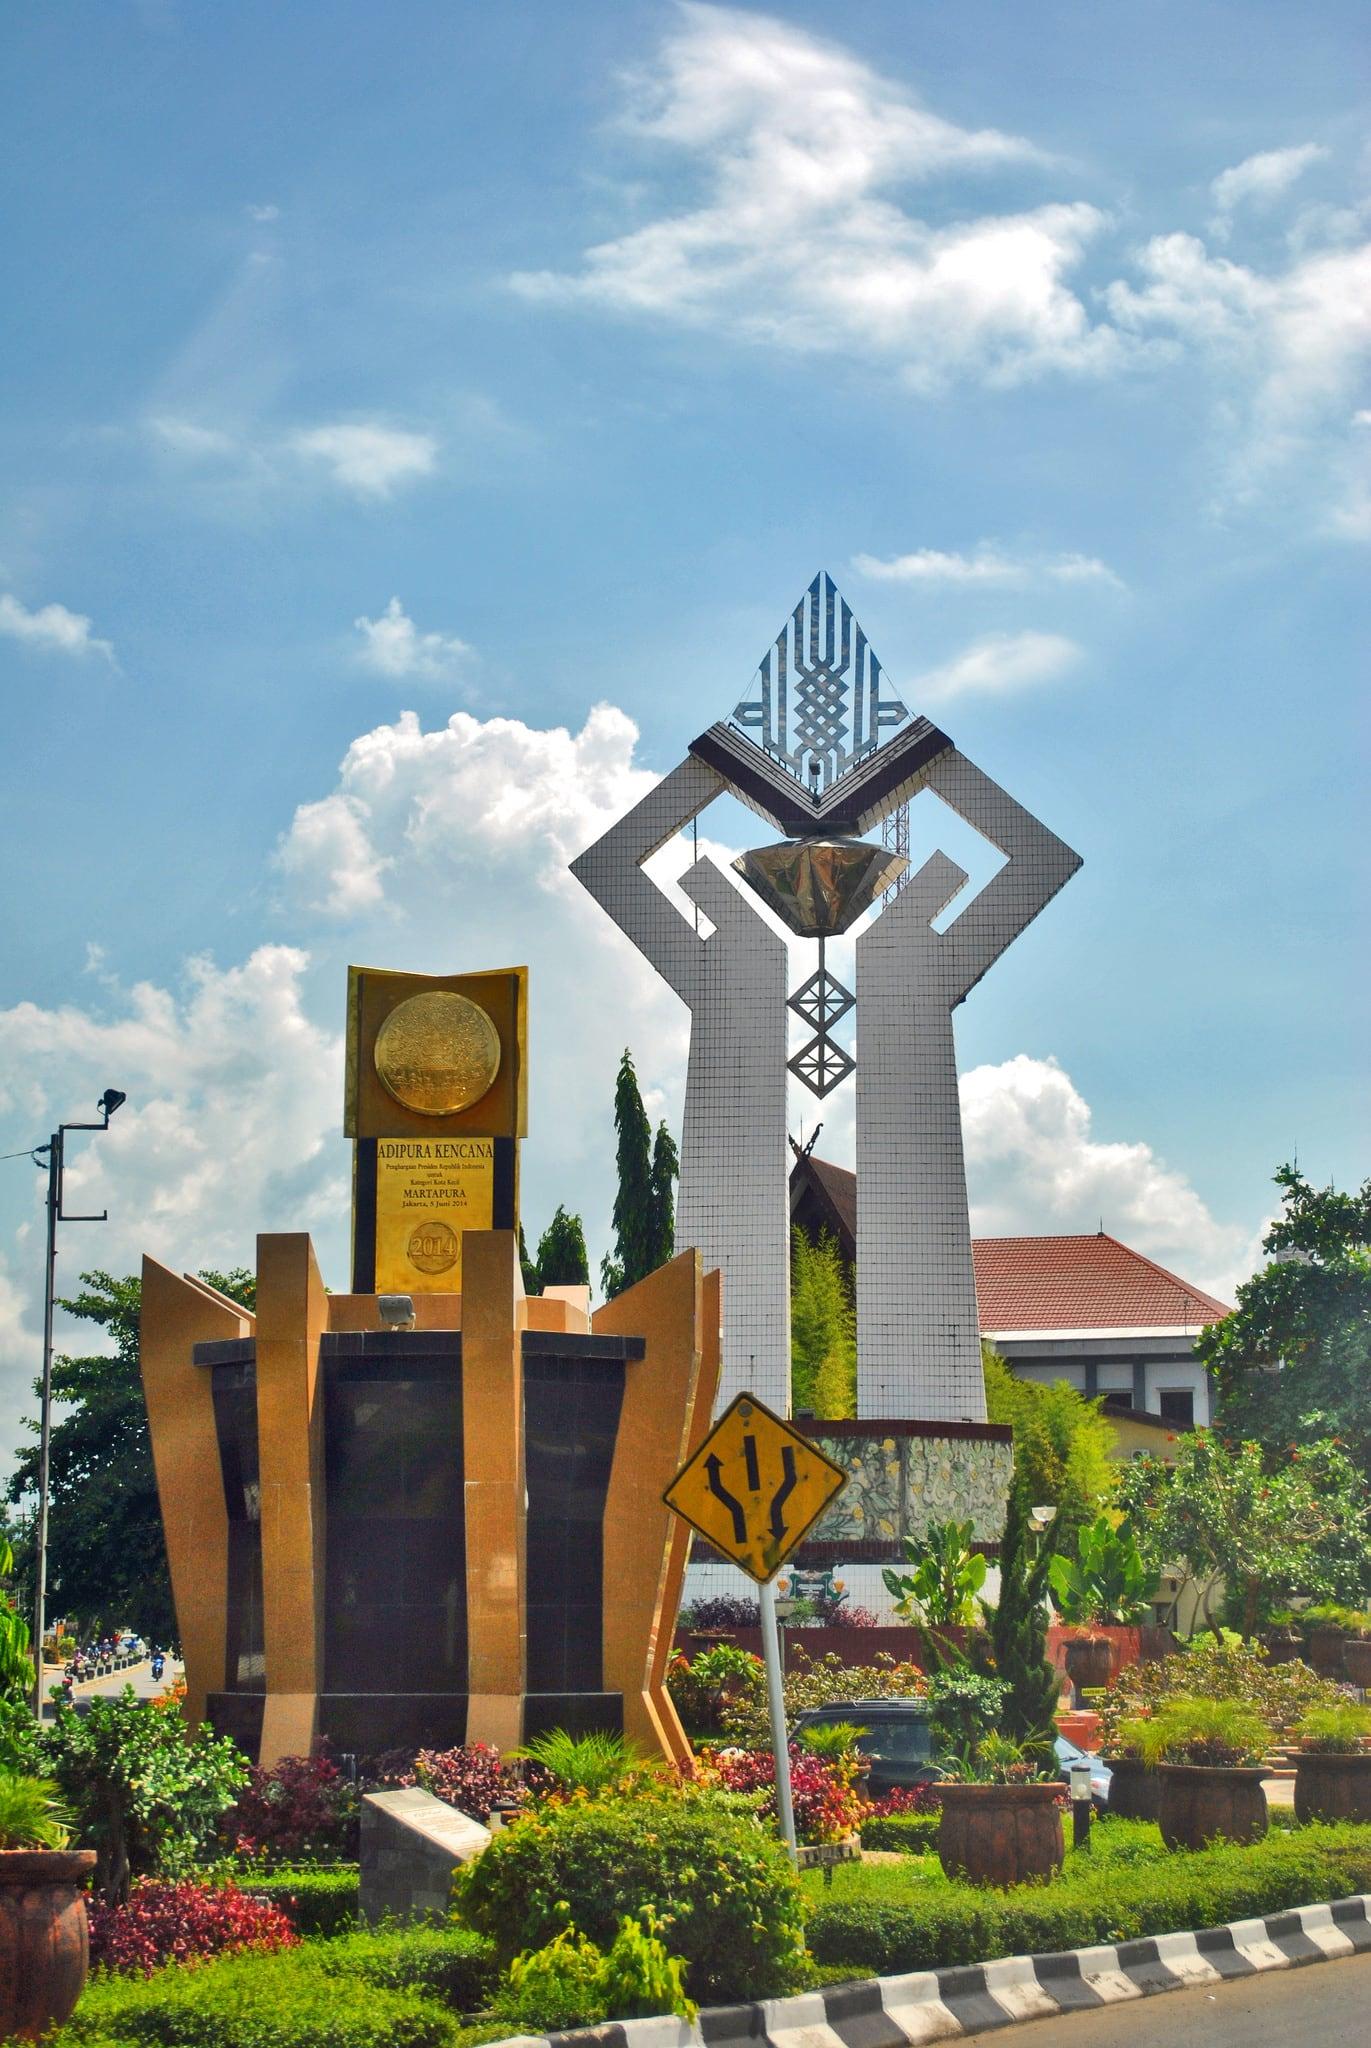 Obrázek Tugu Selamat Datang. monument monumen southkalimantan kalimantanselatan